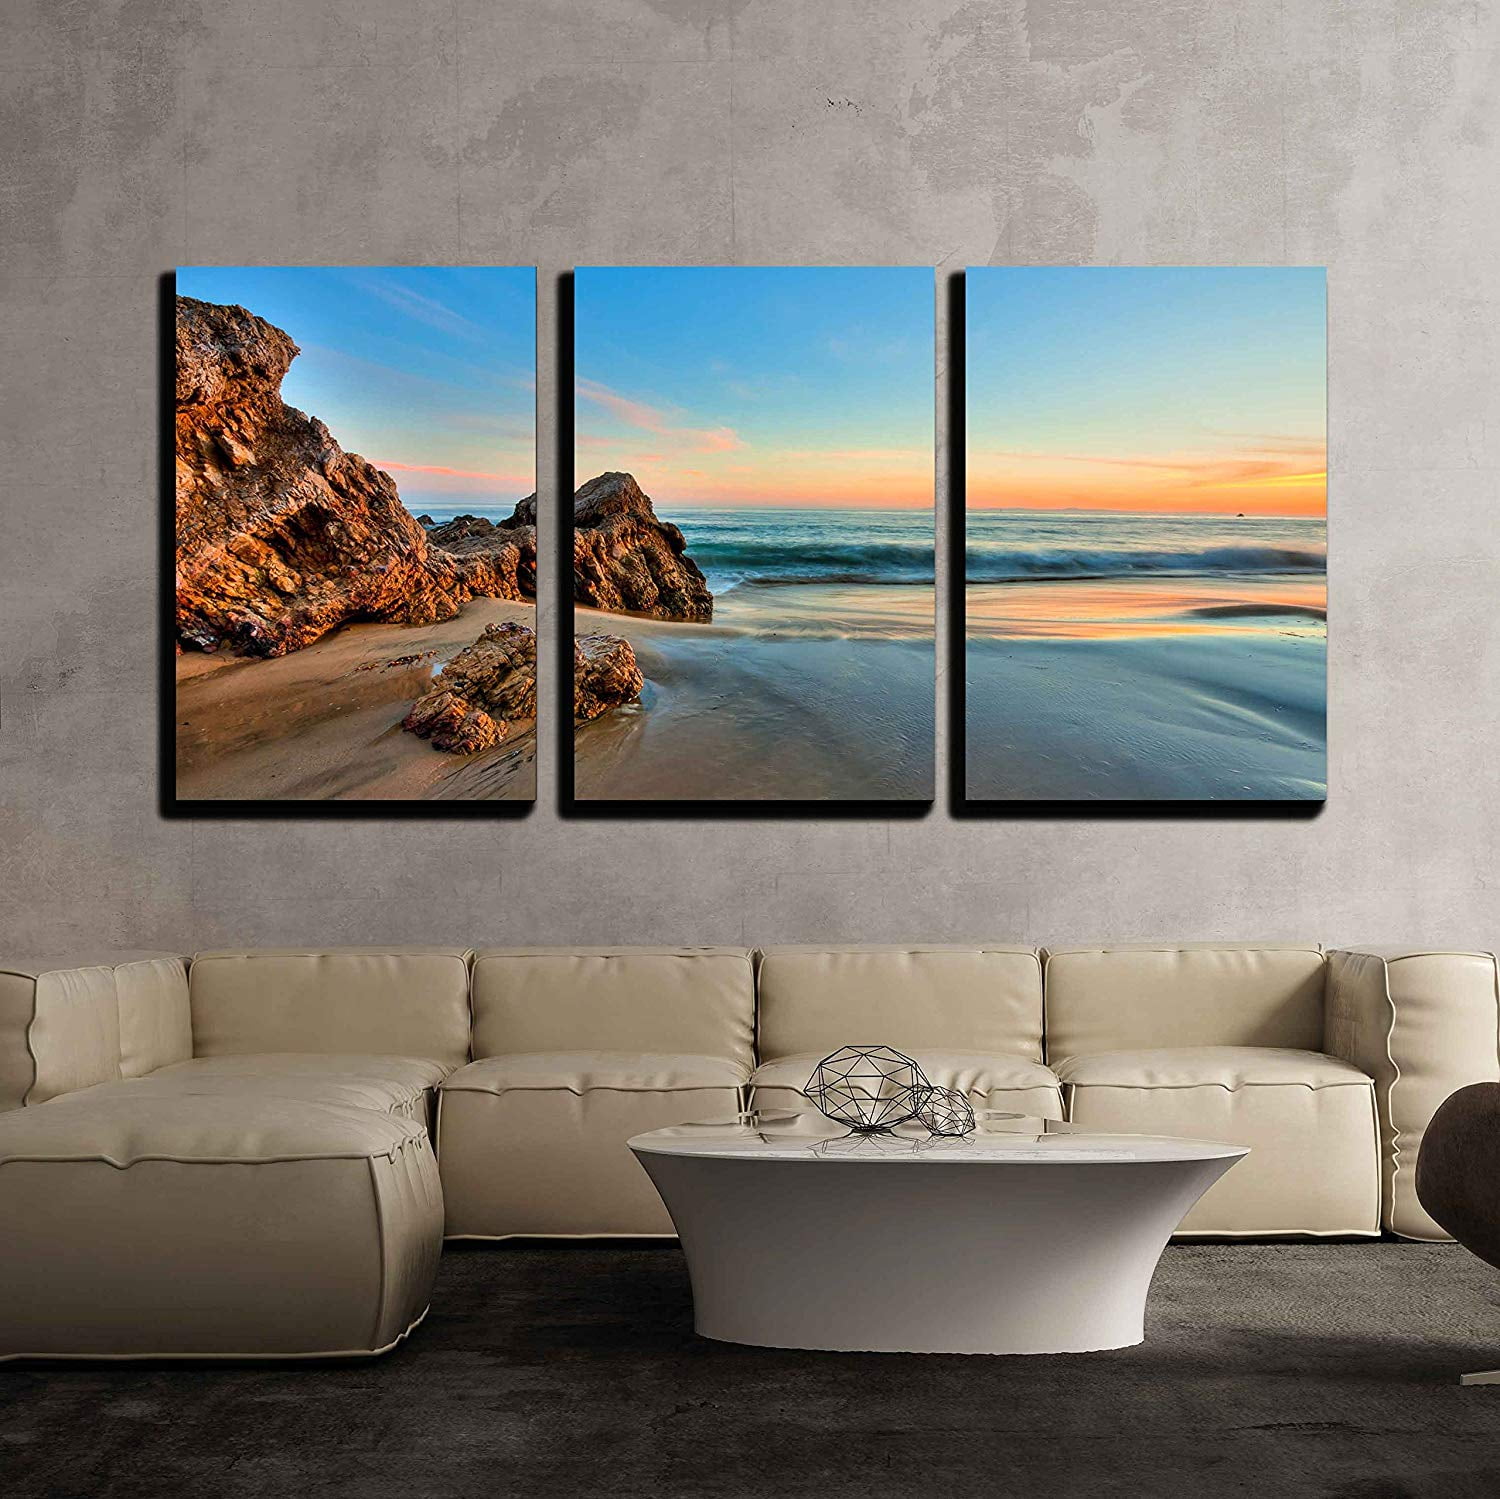 5 Piece Nature Rock Ocean Sunset Beach Canvas Wall Art Picture Print Home Decor 